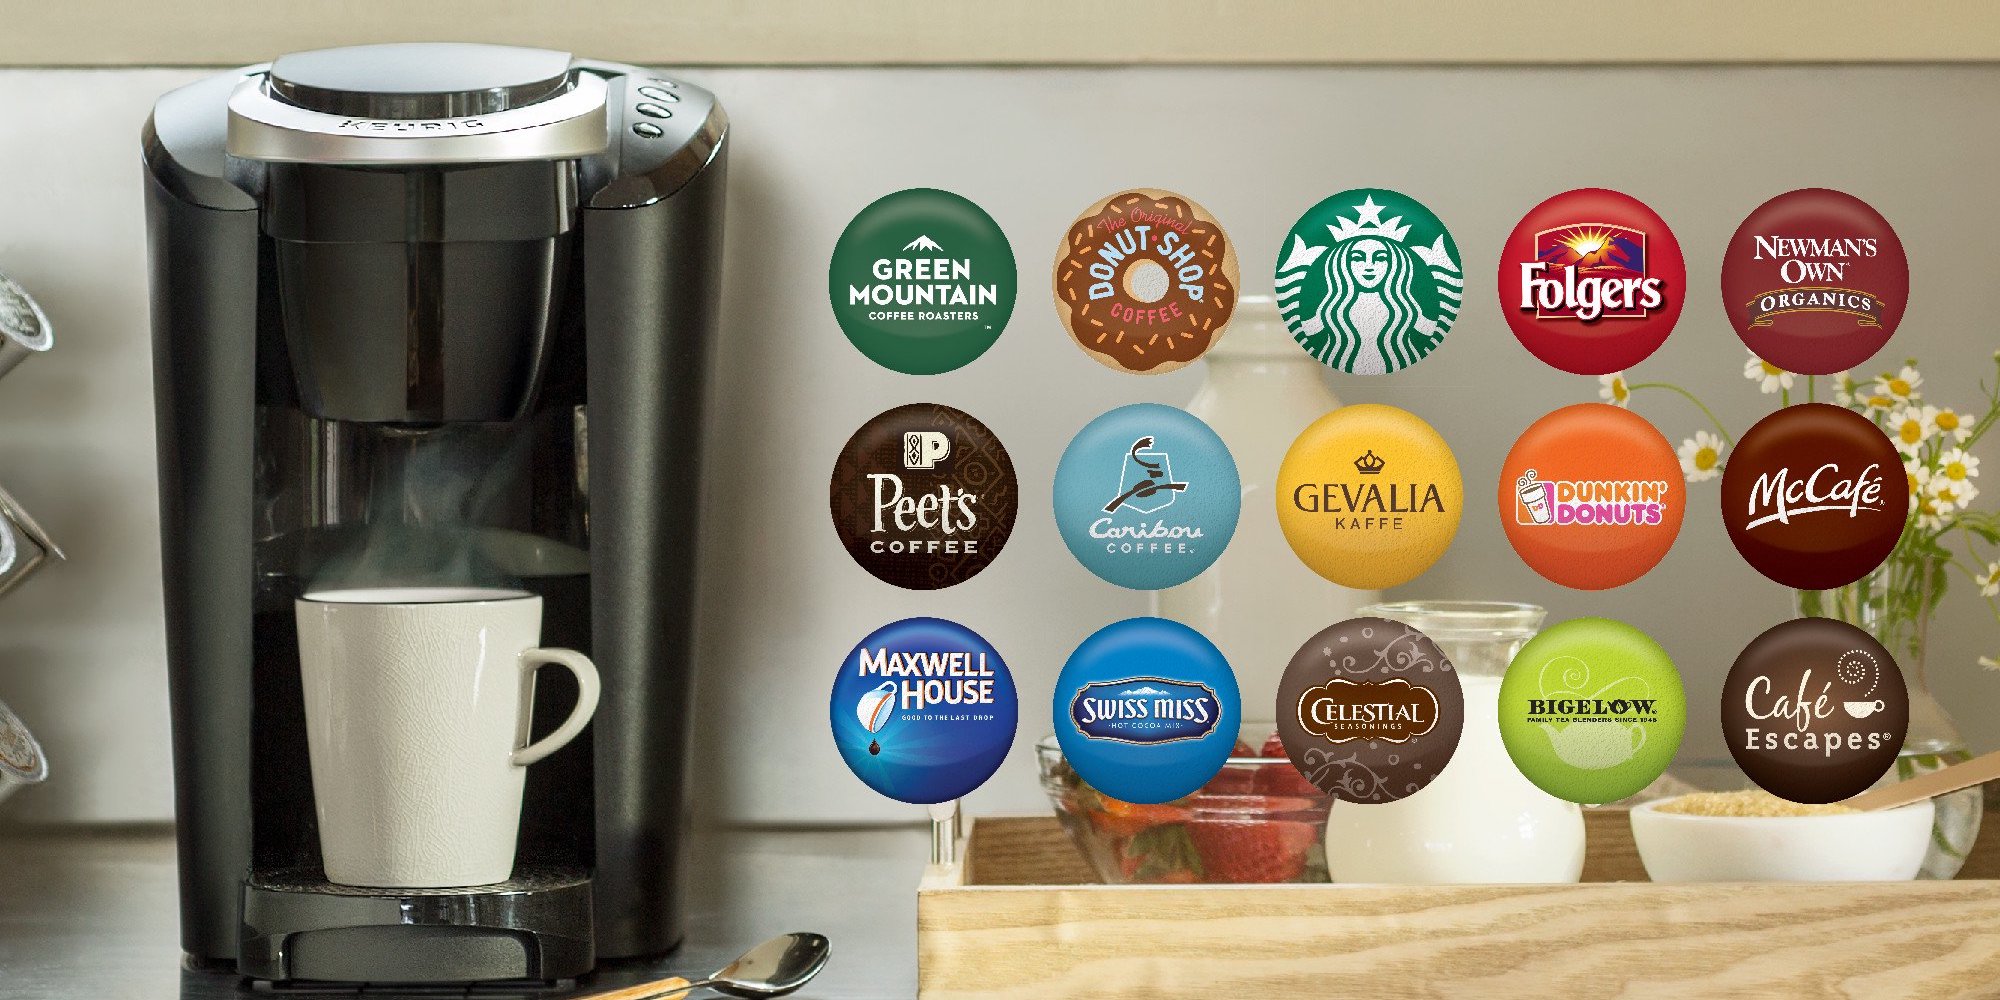 Keurig K-Compact Coffee Maker doorbuster pricing now live at just $39 (Reg.  $67+)